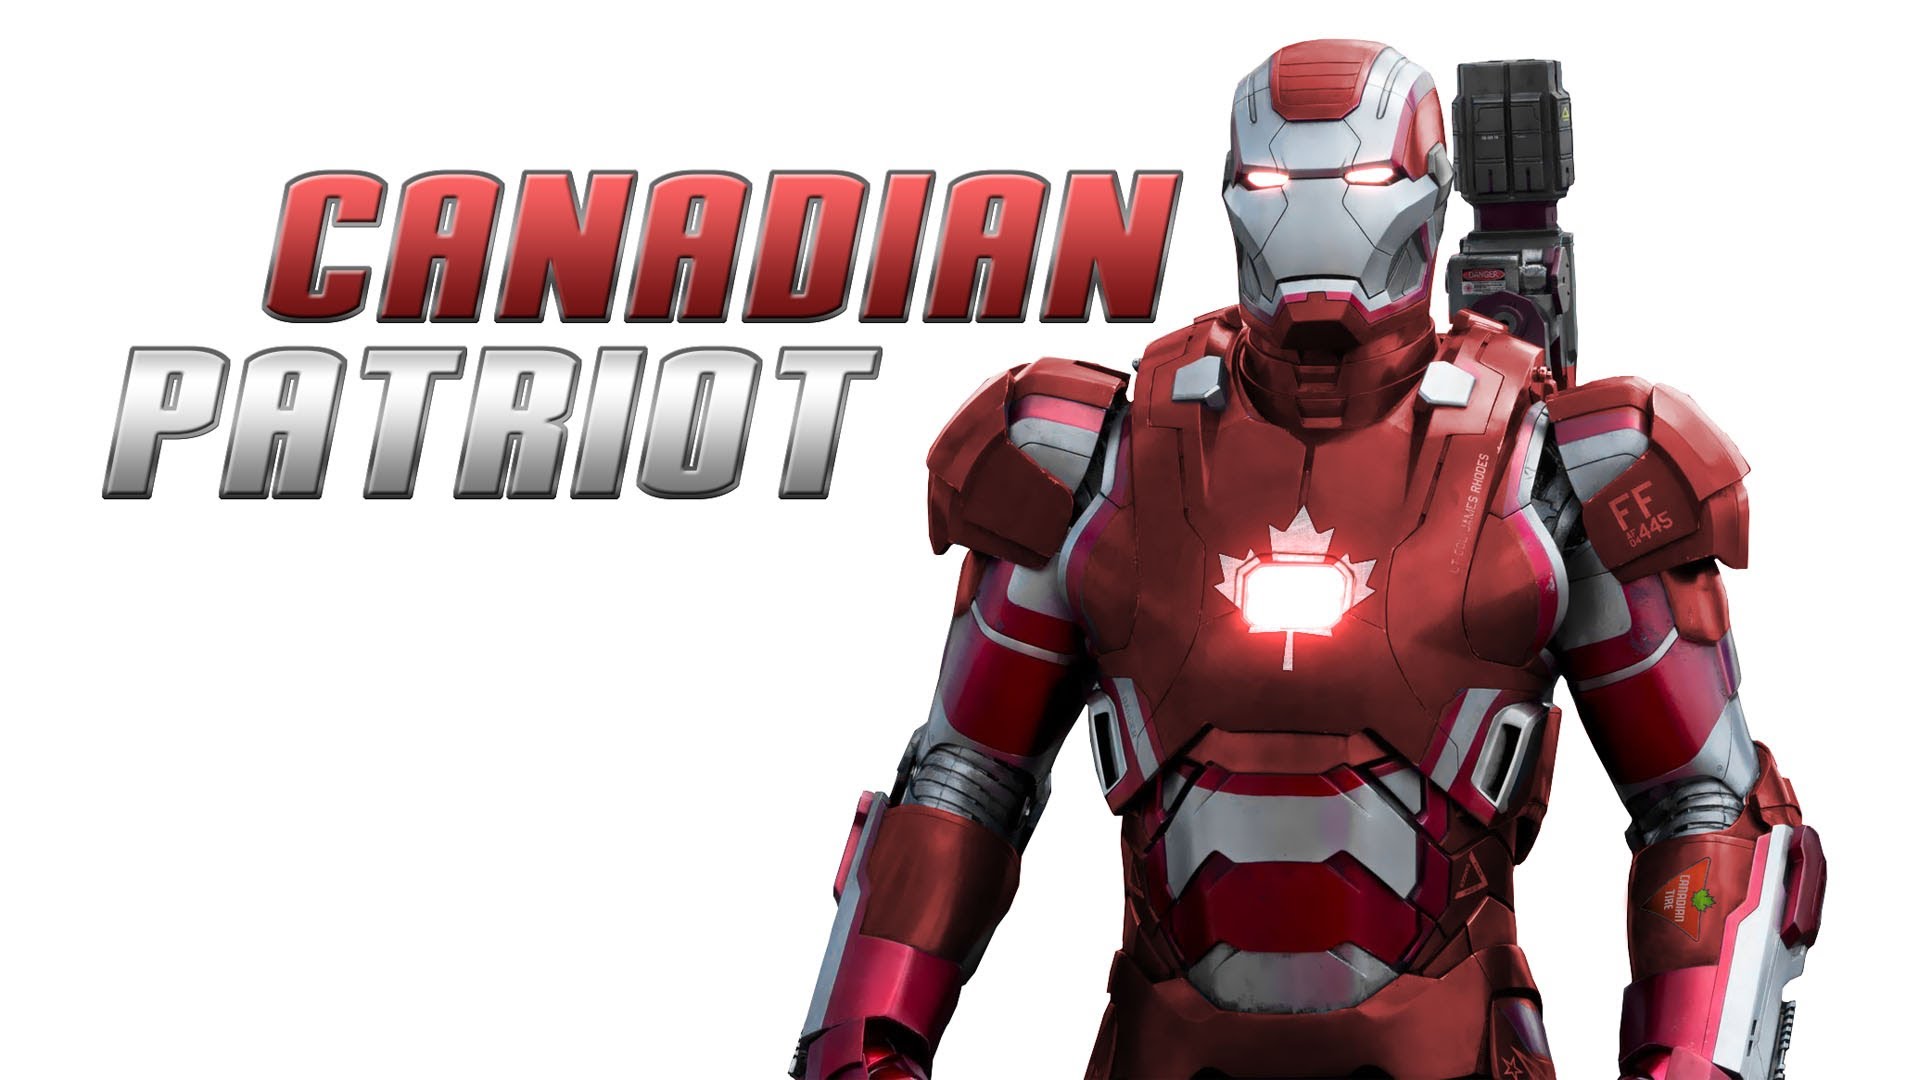 Transform Iron Patriot into Canadian Patriot - Photoshop Tutorial ...